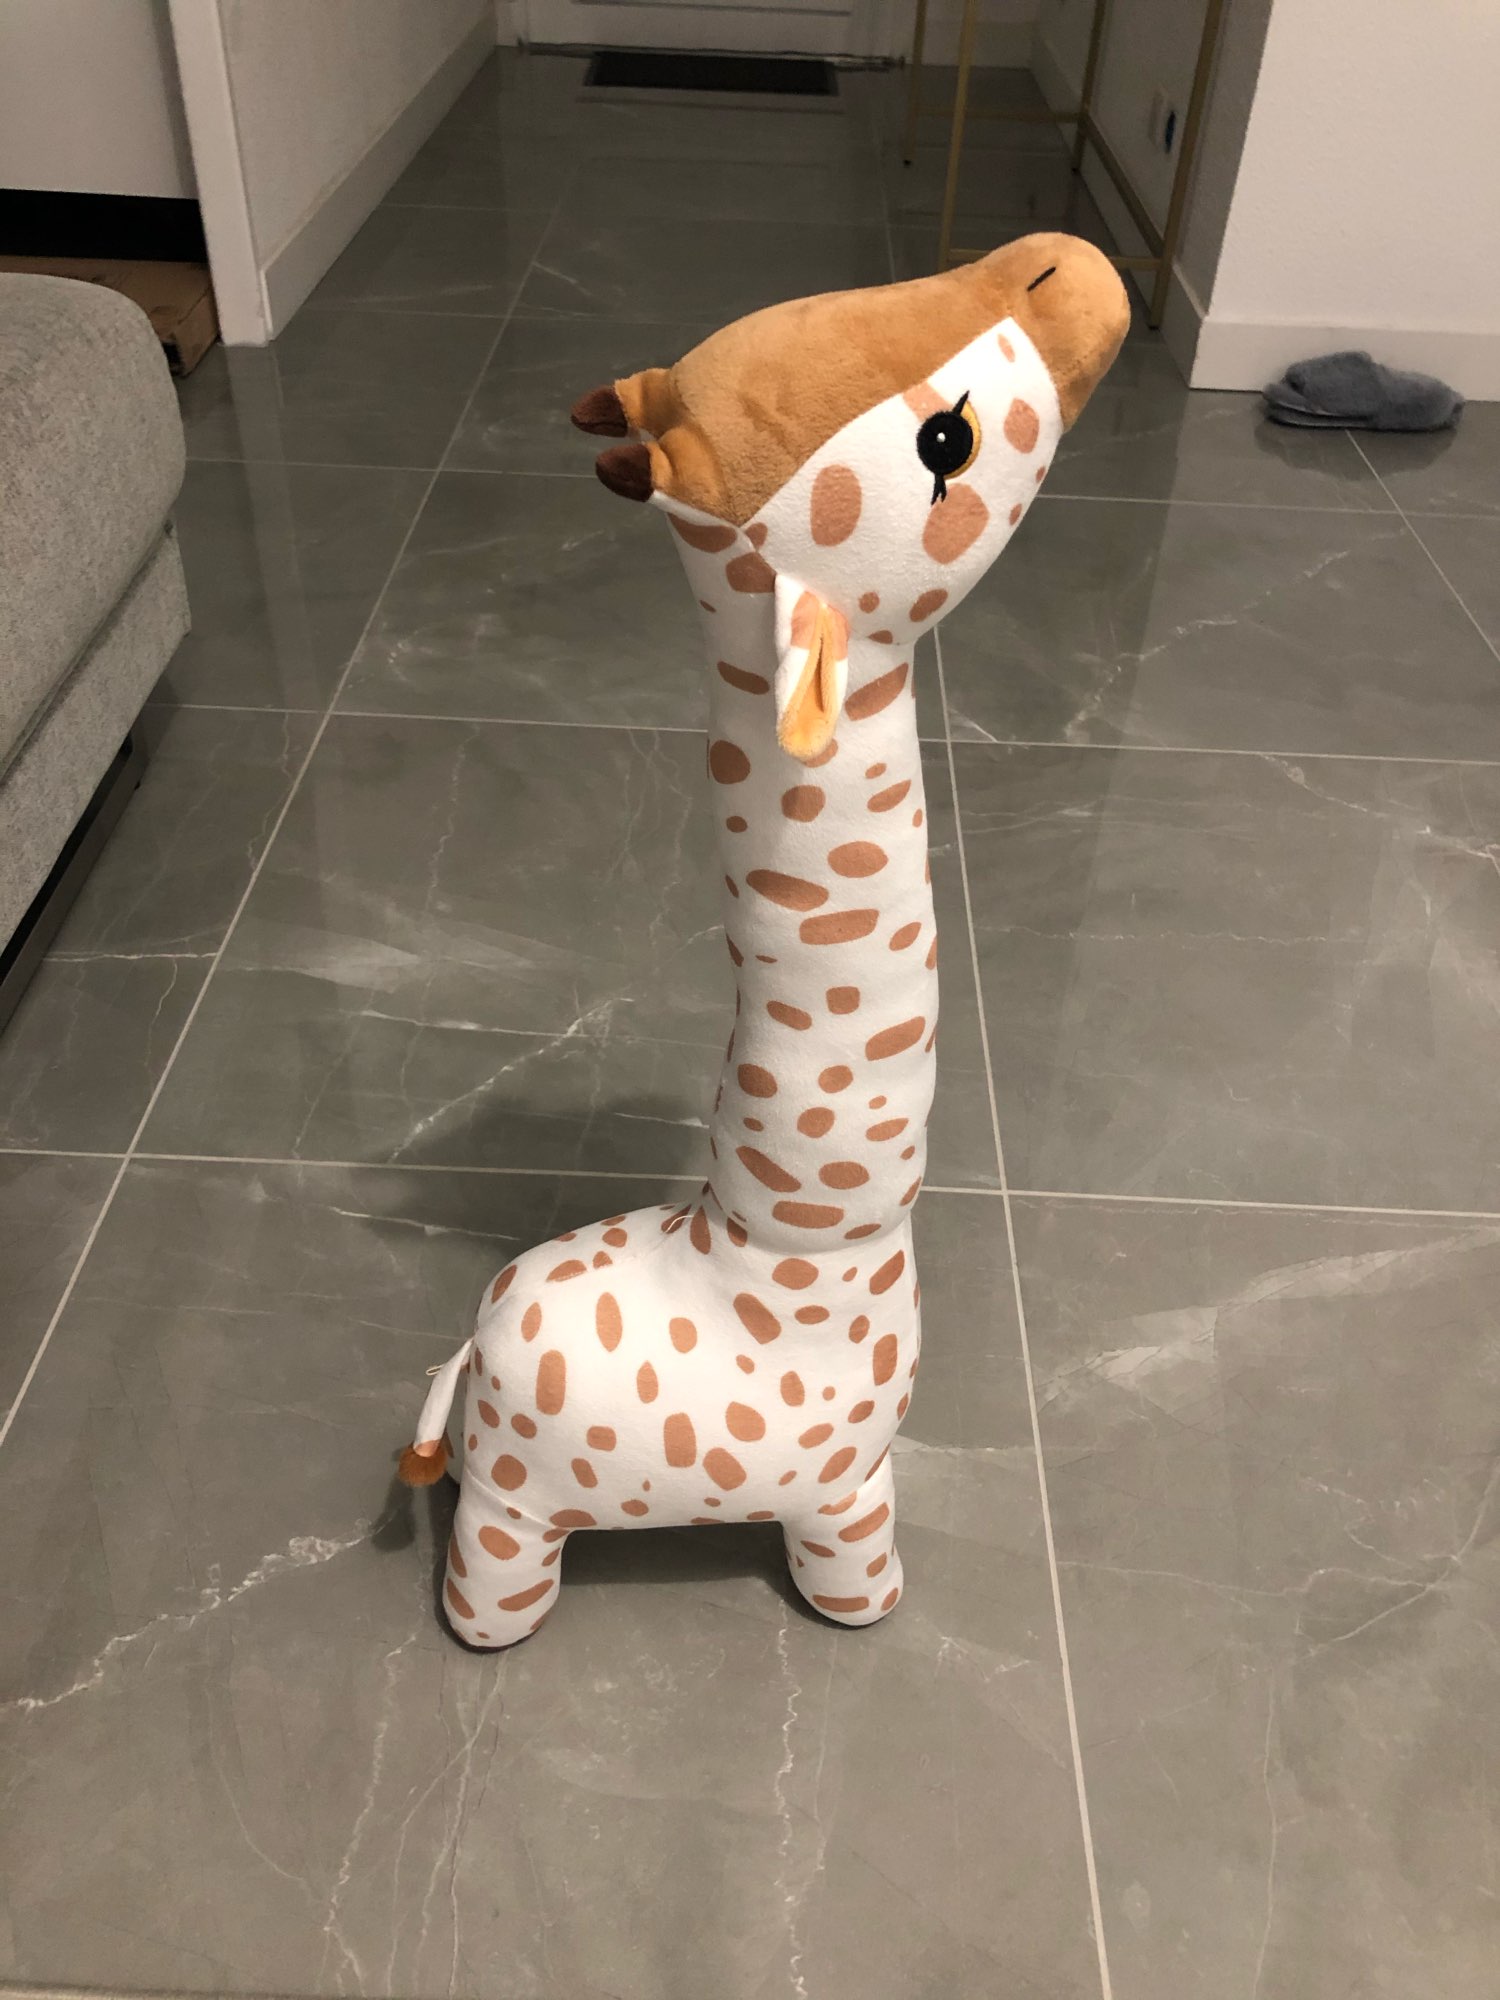 67cm Simulation Standing Giraffe Plush Toy hold pillow Soft Stuffed Animal Sophie deer Sleeping Doll Toy kids baby Birthday Gift